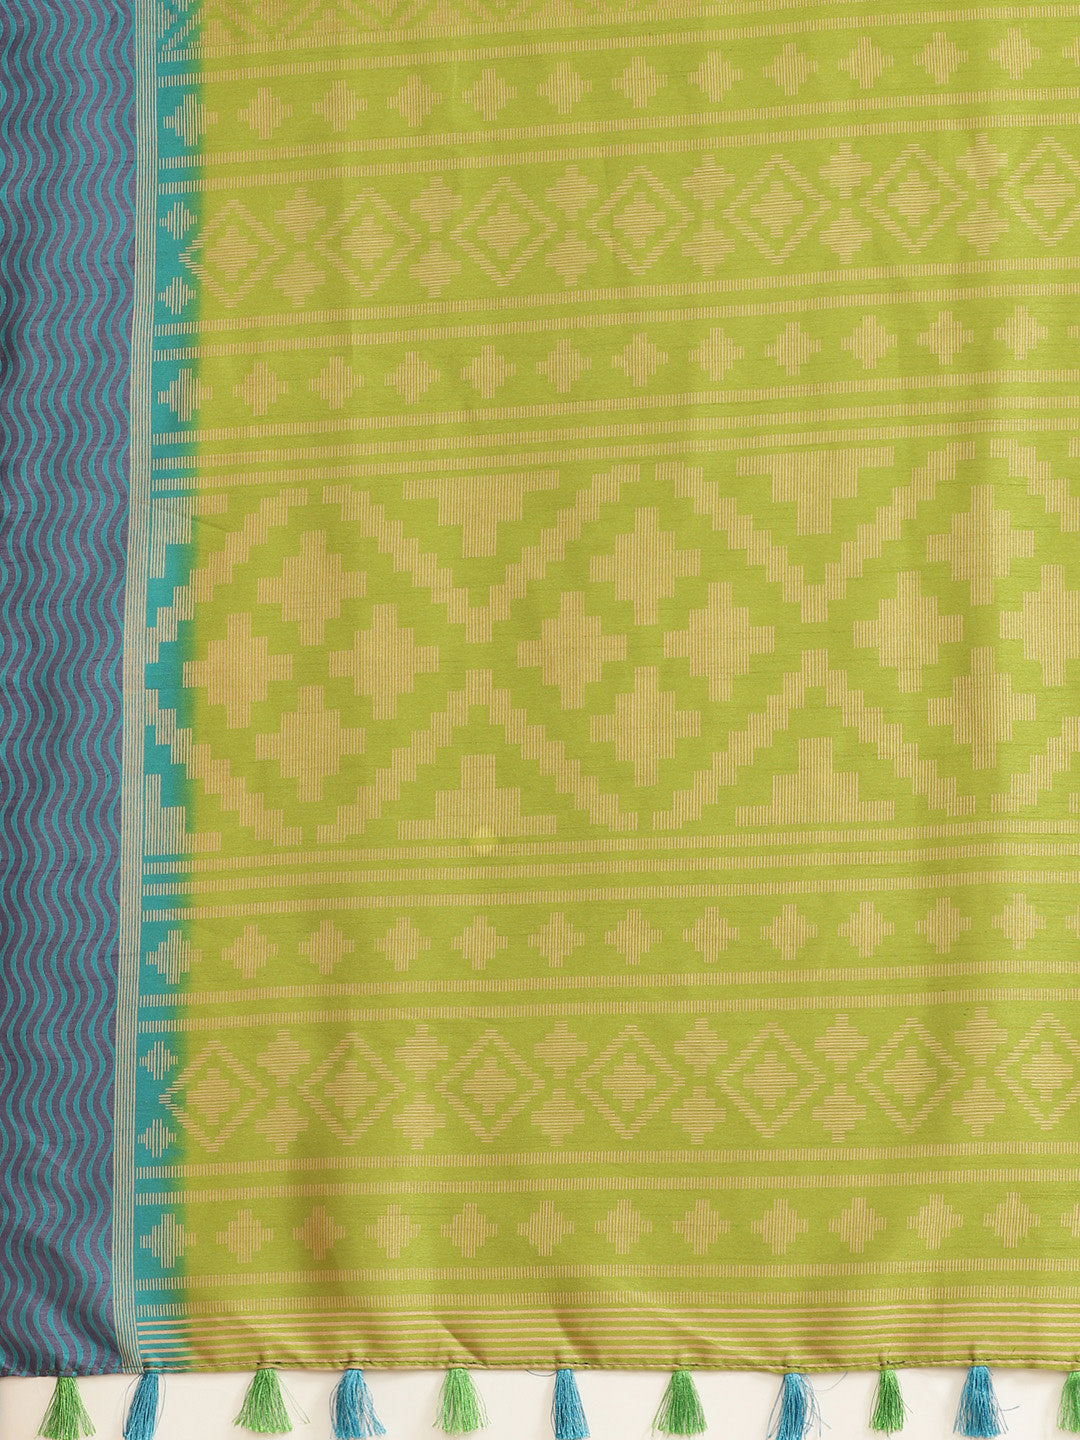 Women's Green Cotton Blend Printed Saree - Ahika